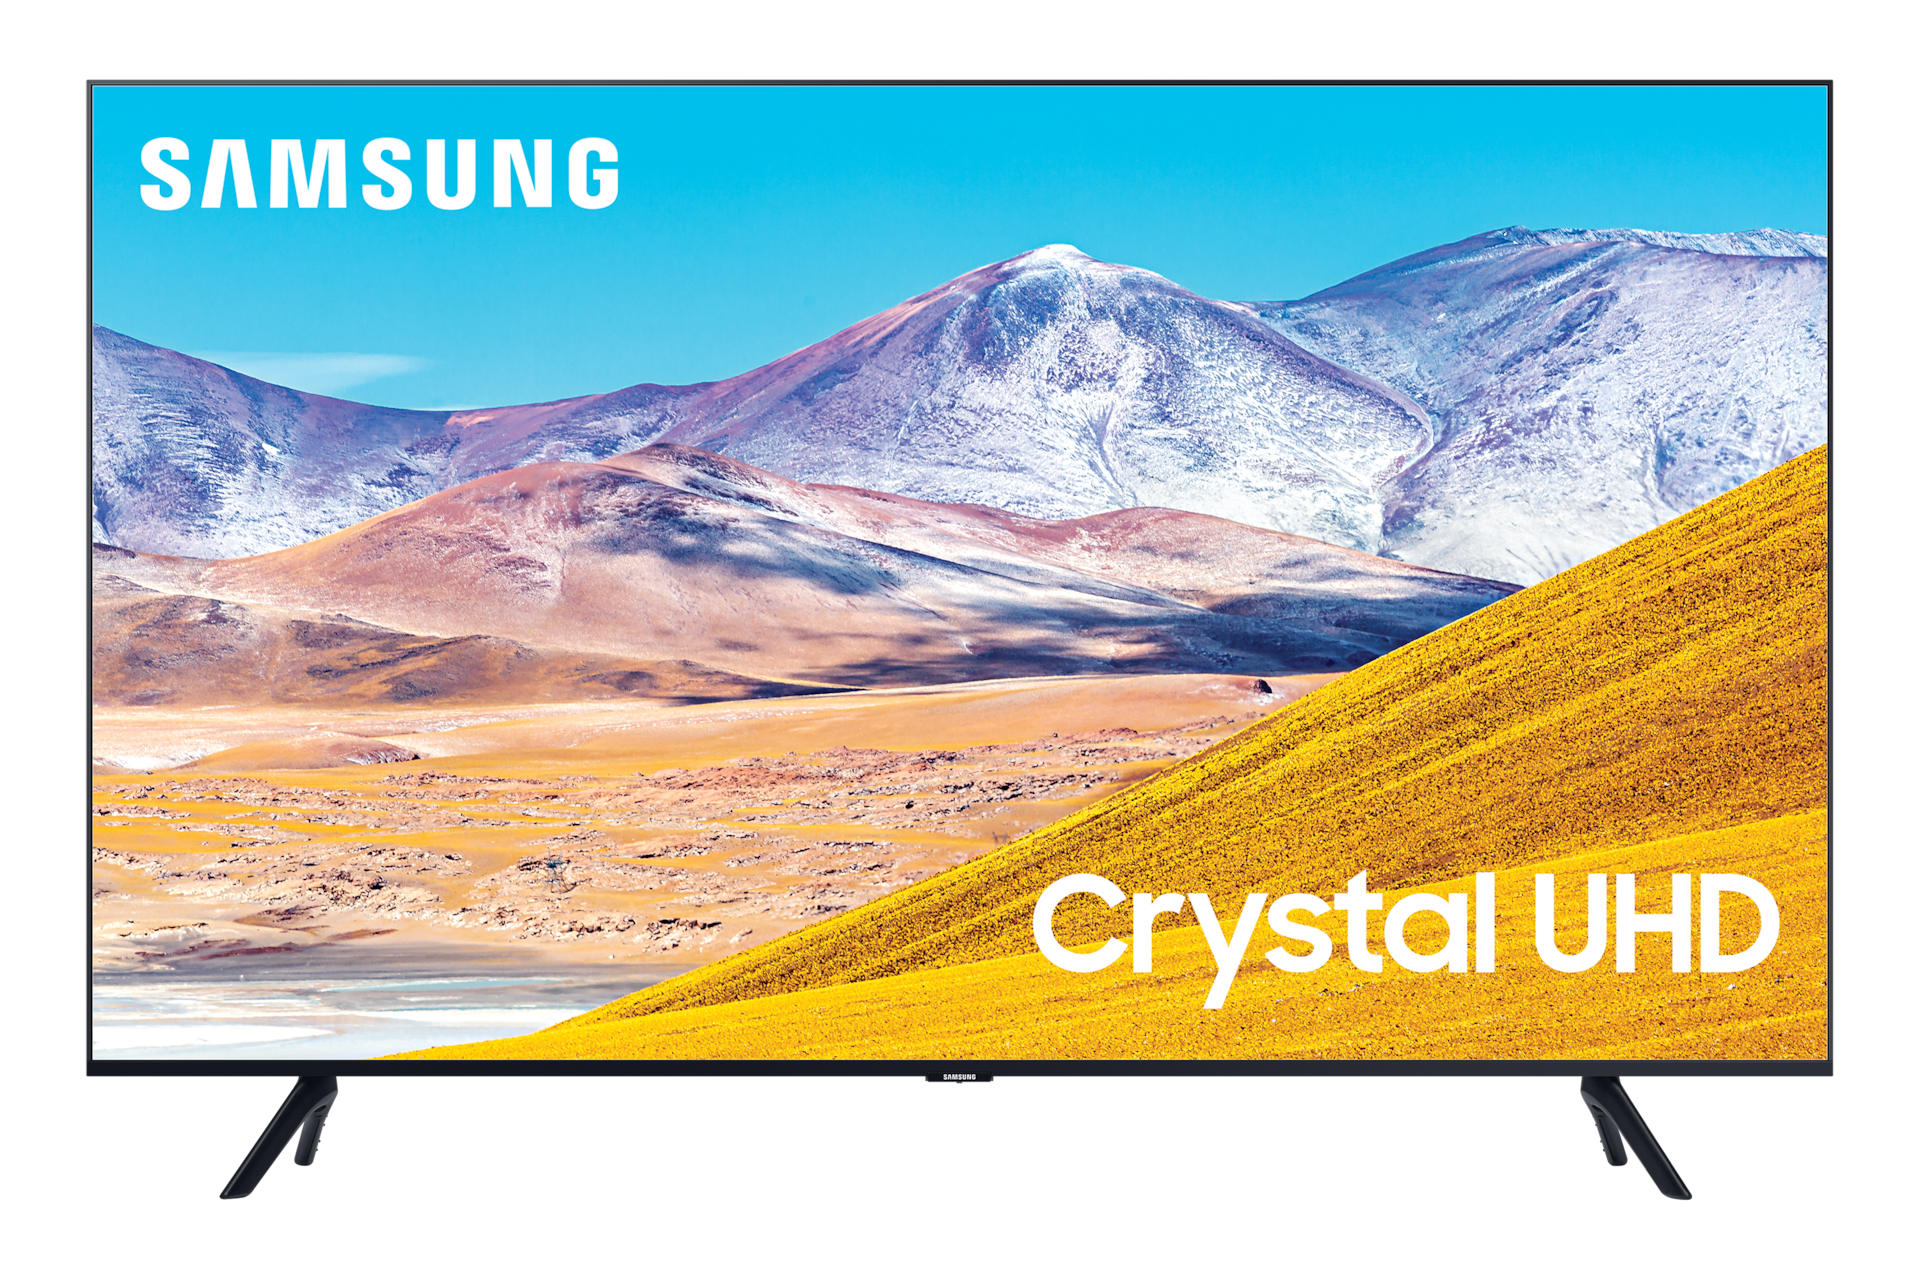 13+ Samsung 55 inch crystal uhd 4k smart tv review info